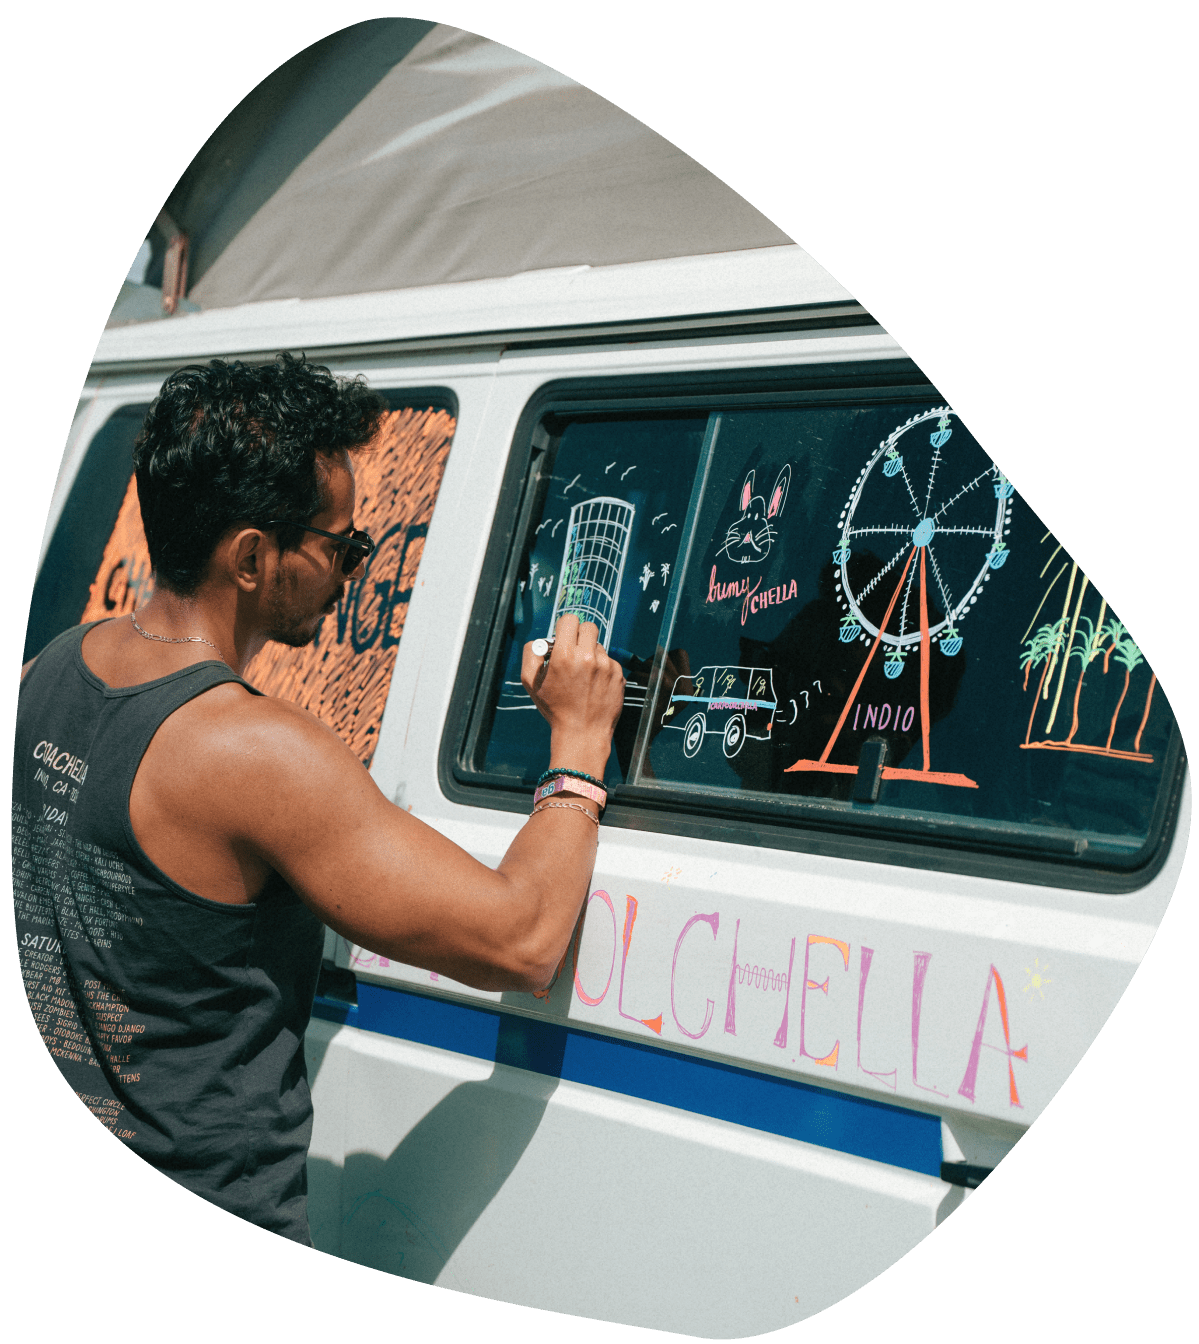 Coachella fan decorating van for Carpoolchella